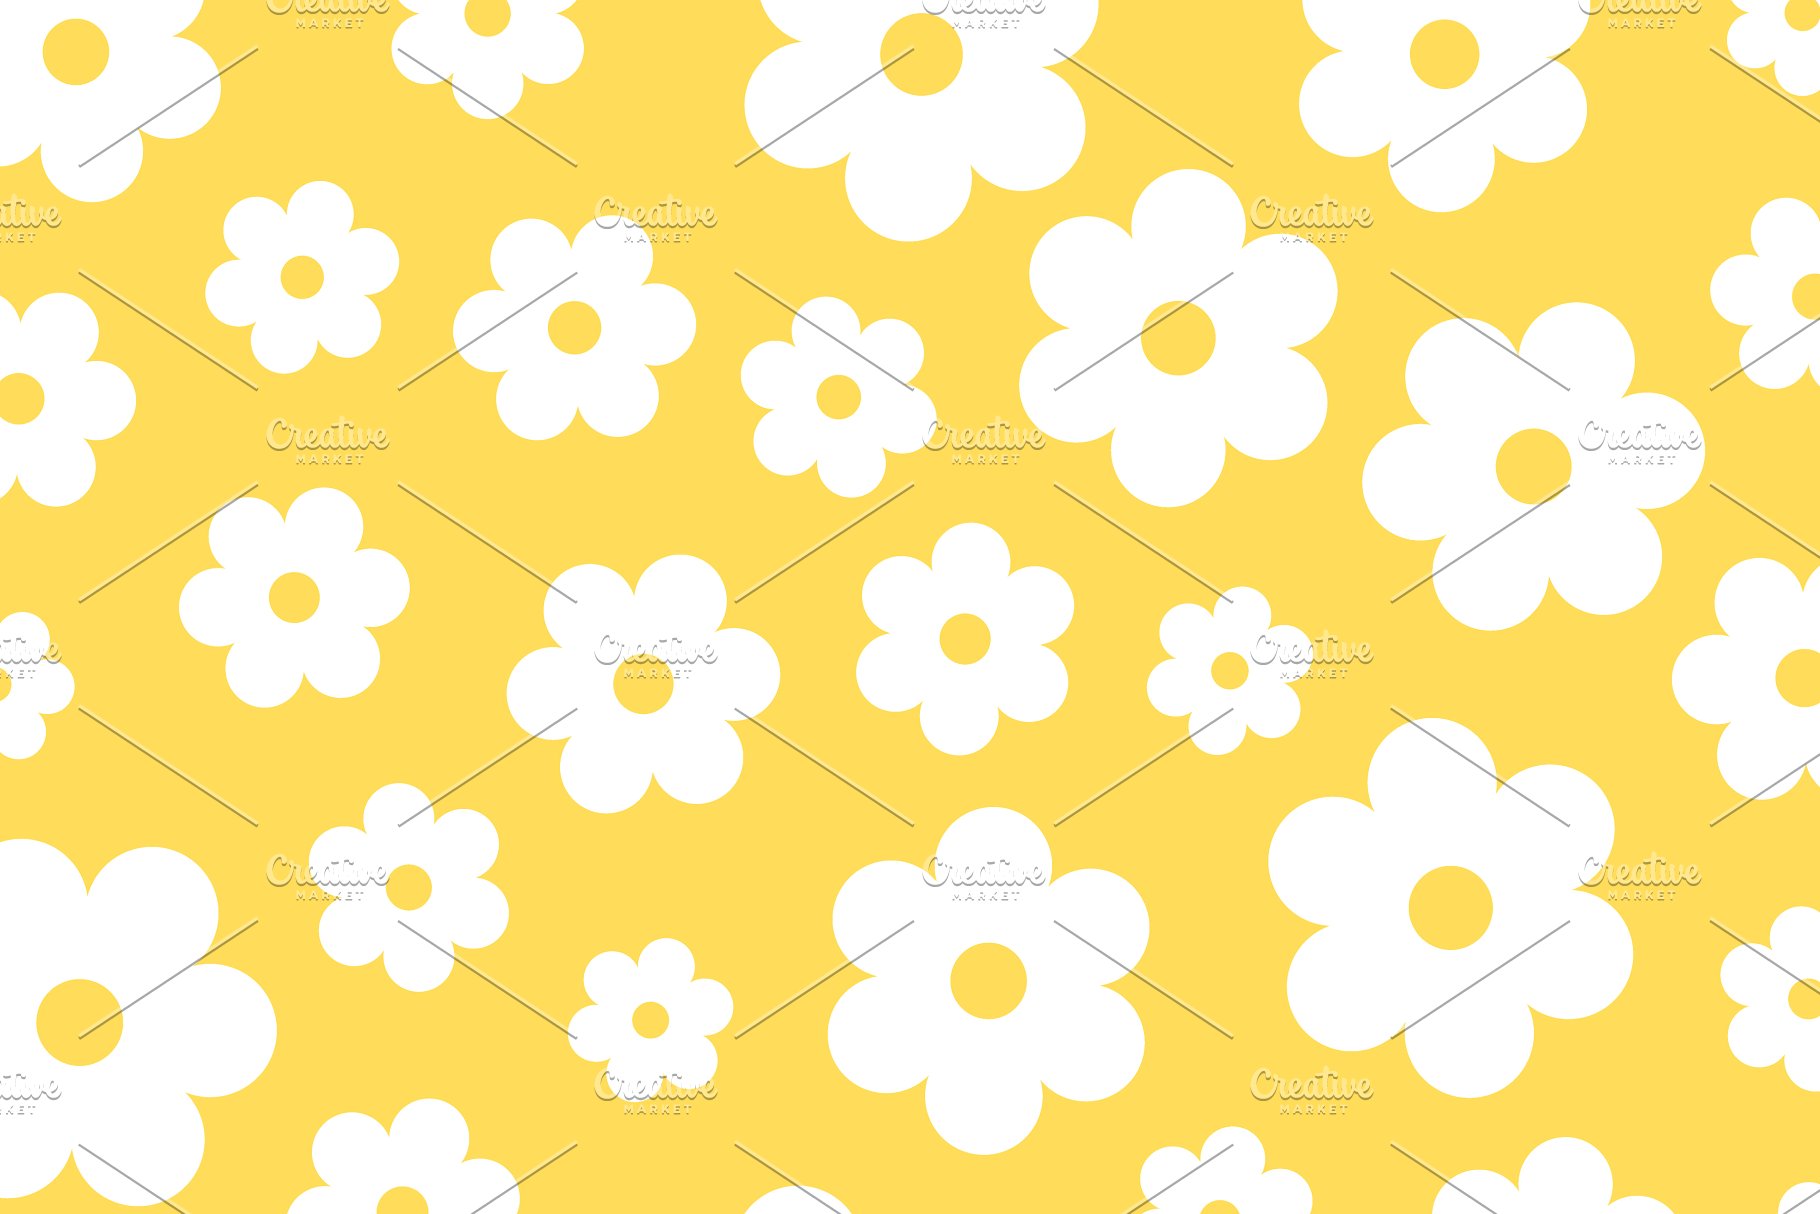 60种配色1440款花卉图案纹理 1,440 Floral Patterns in 60 Colors插图(19)